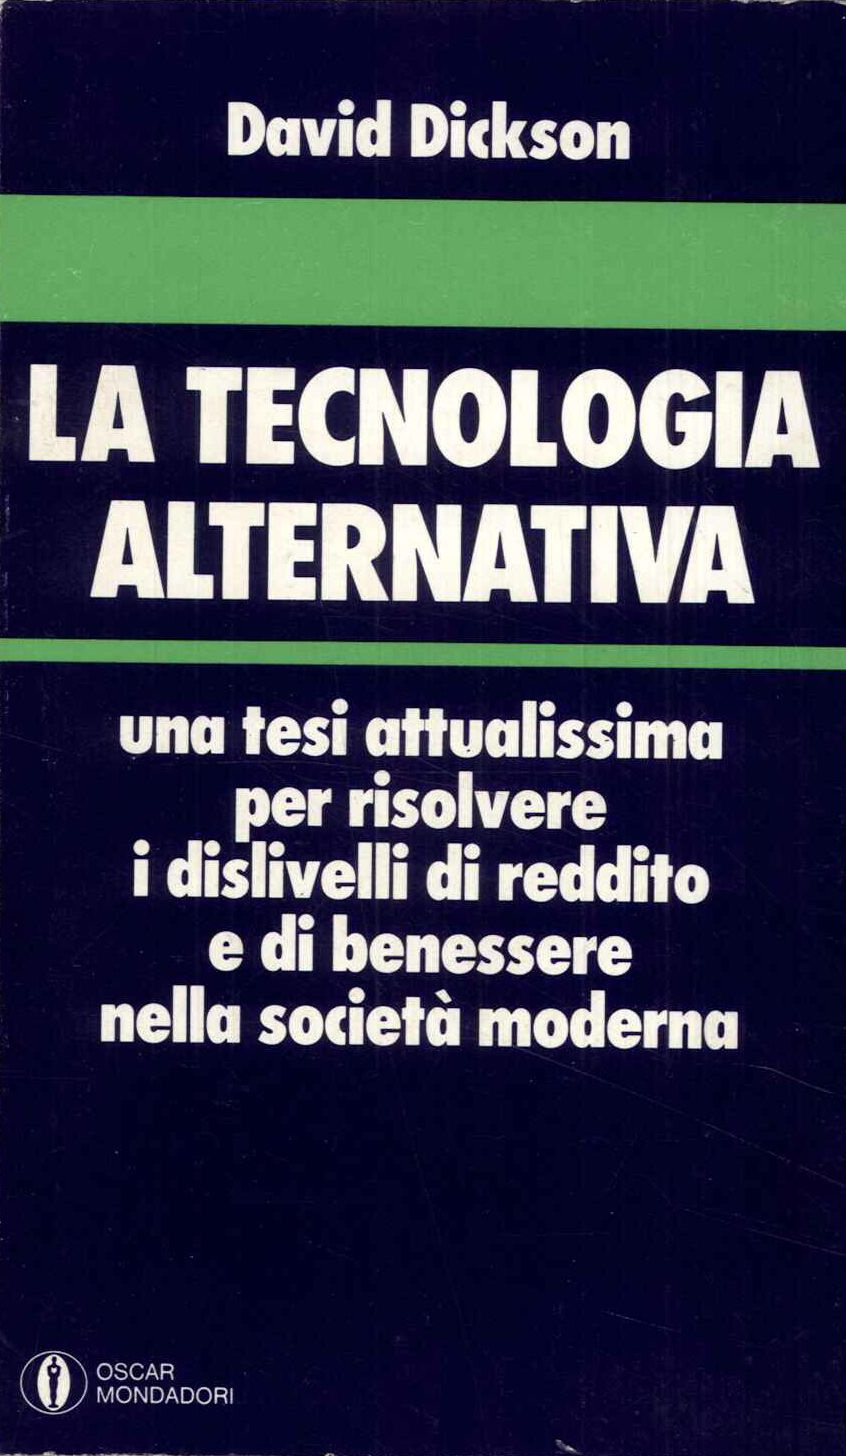 La tecnologia alternativa